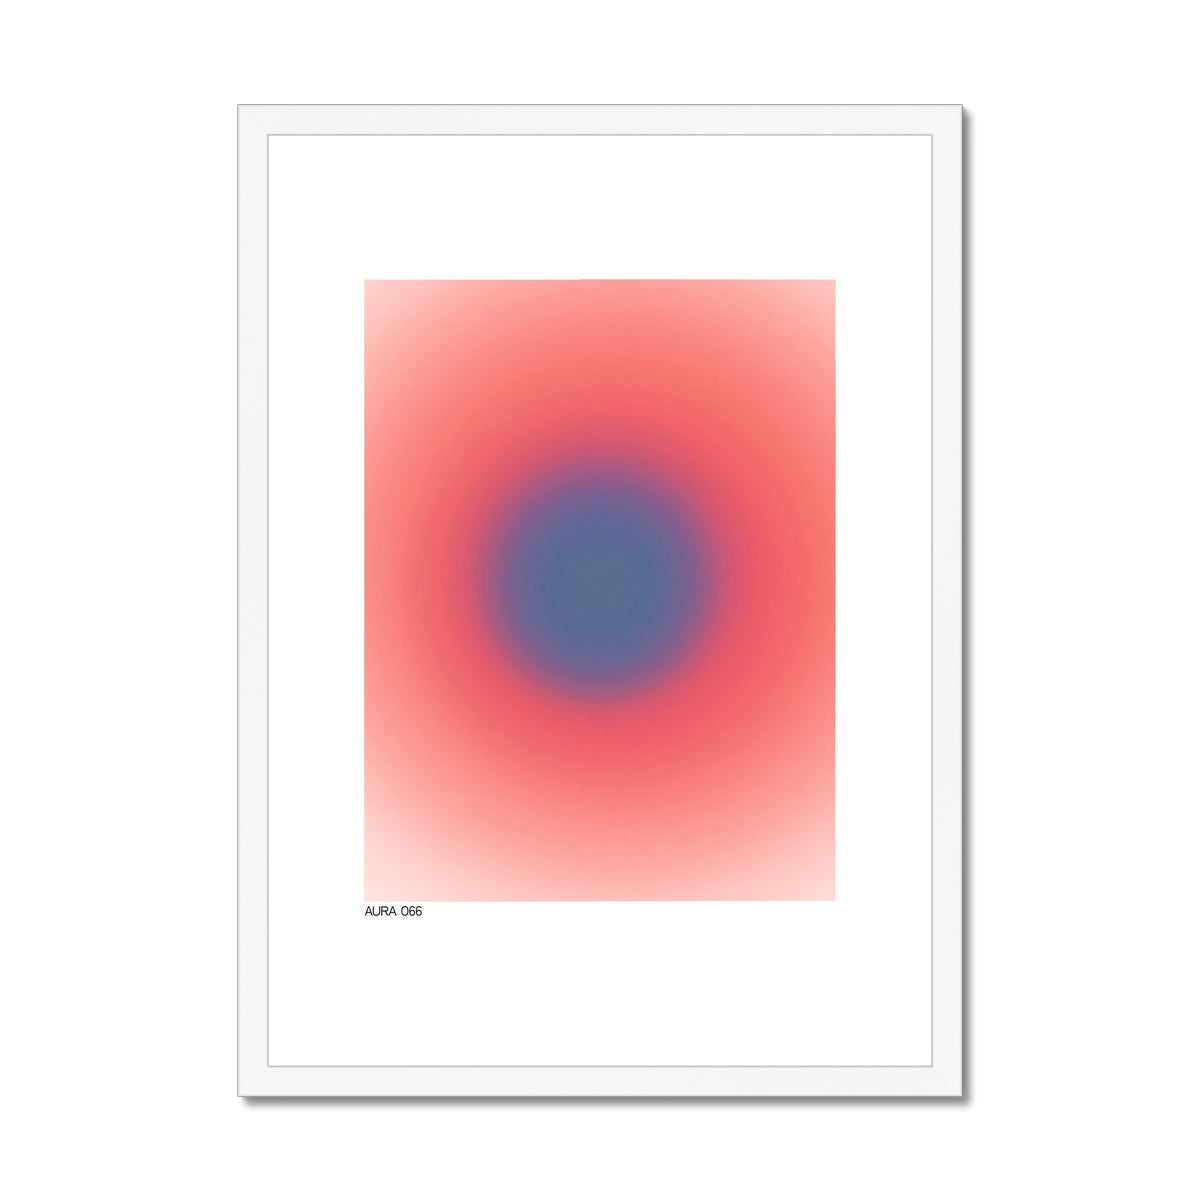 aura 066 Framed & Mounted Print